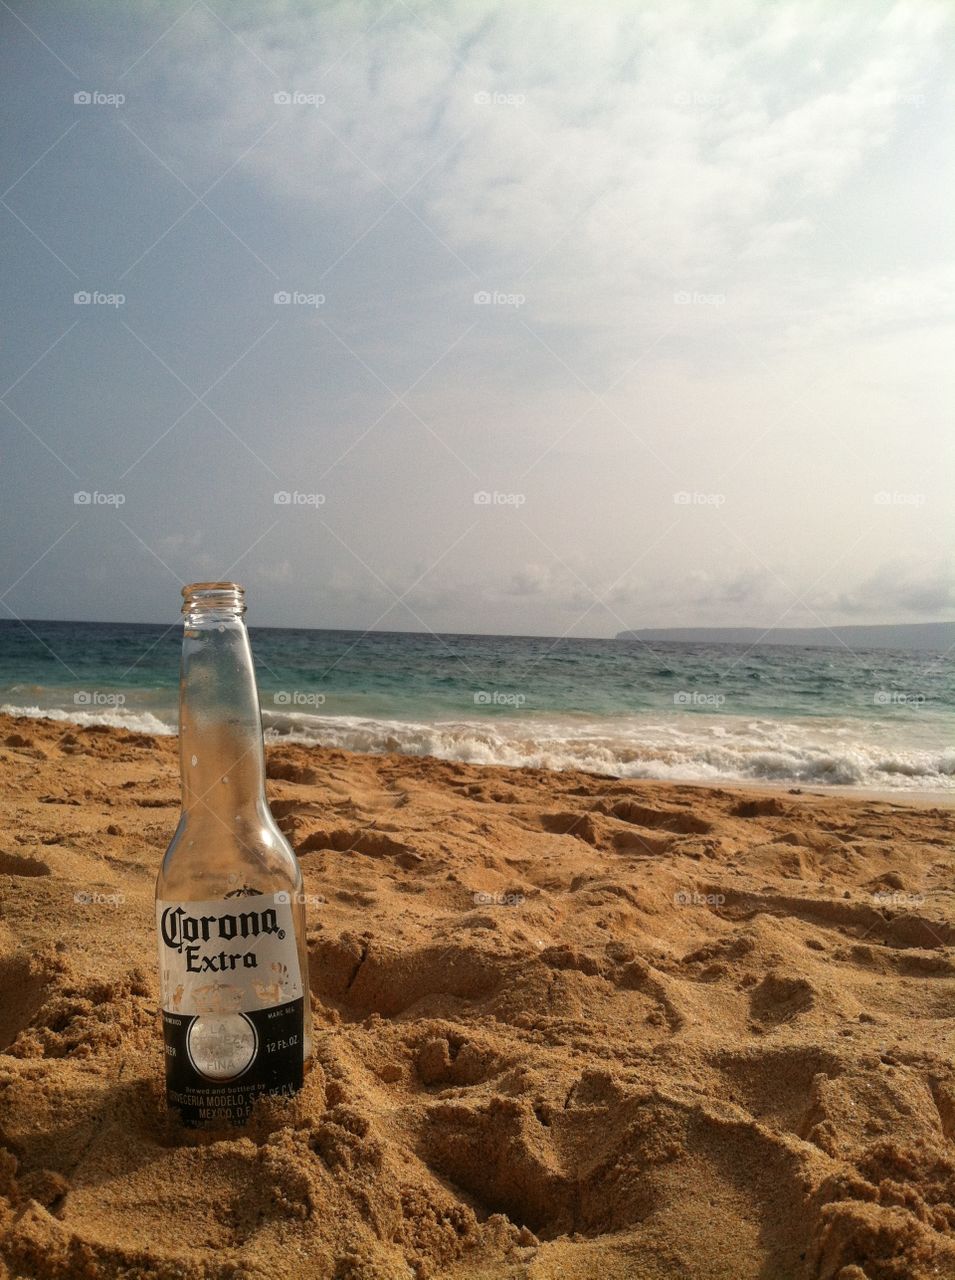 Found my beach. Corona on big beach